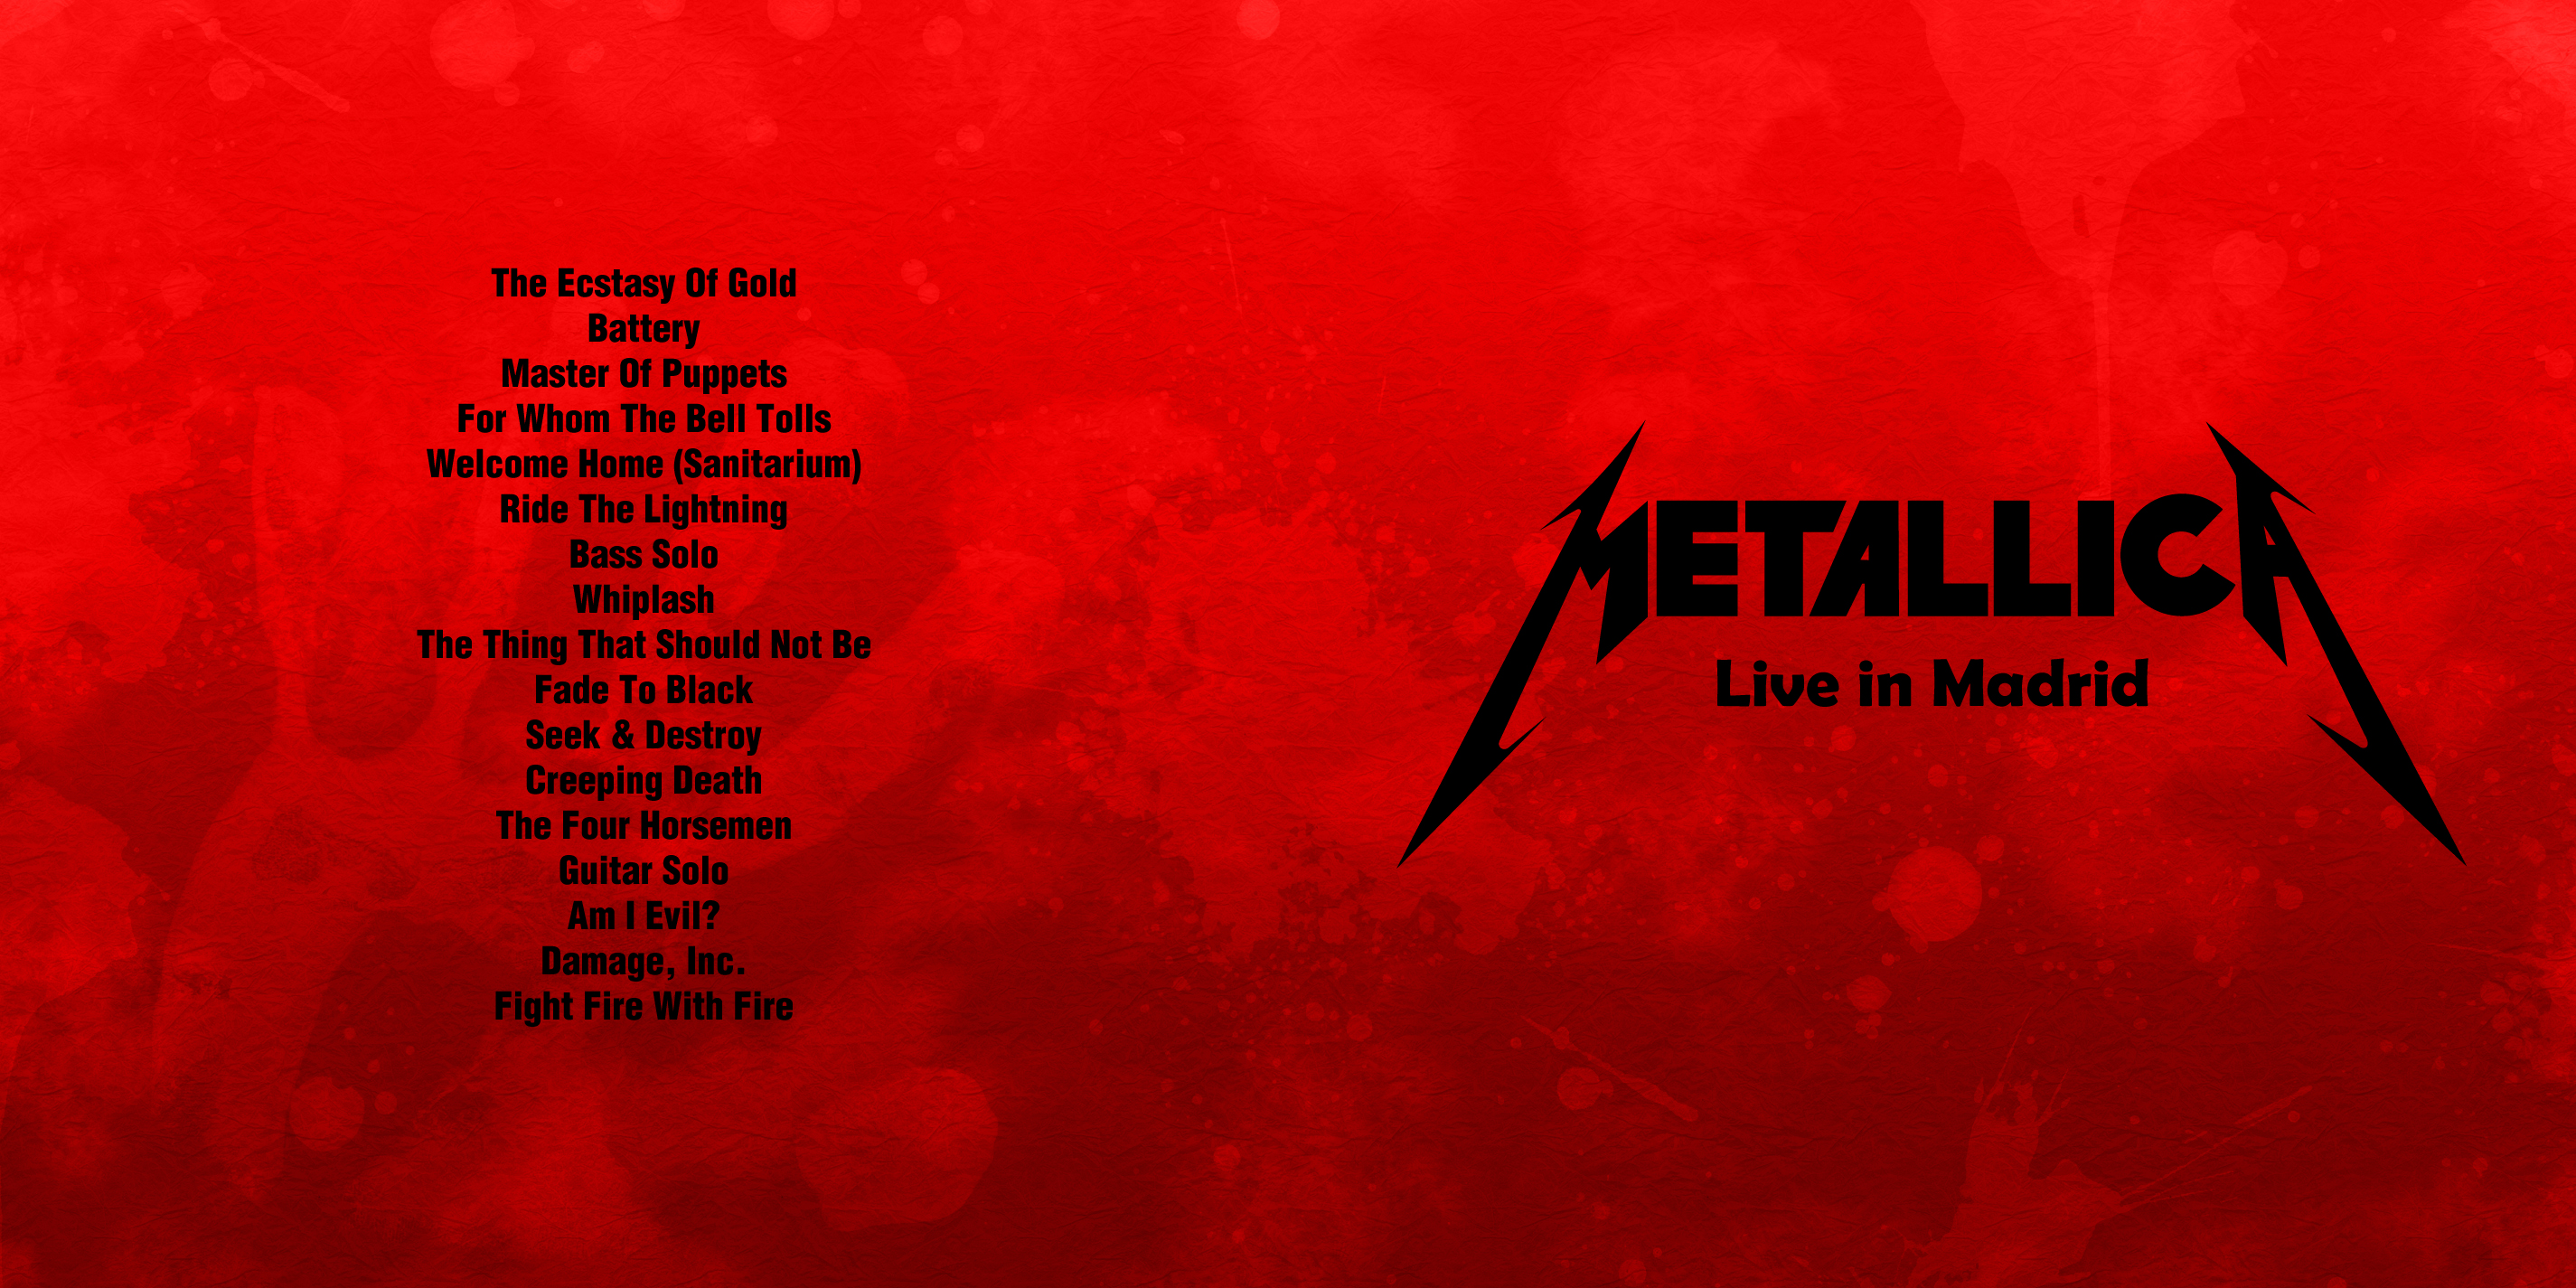 Metallica Thrash Metal Heavy Album Cover Art Poster